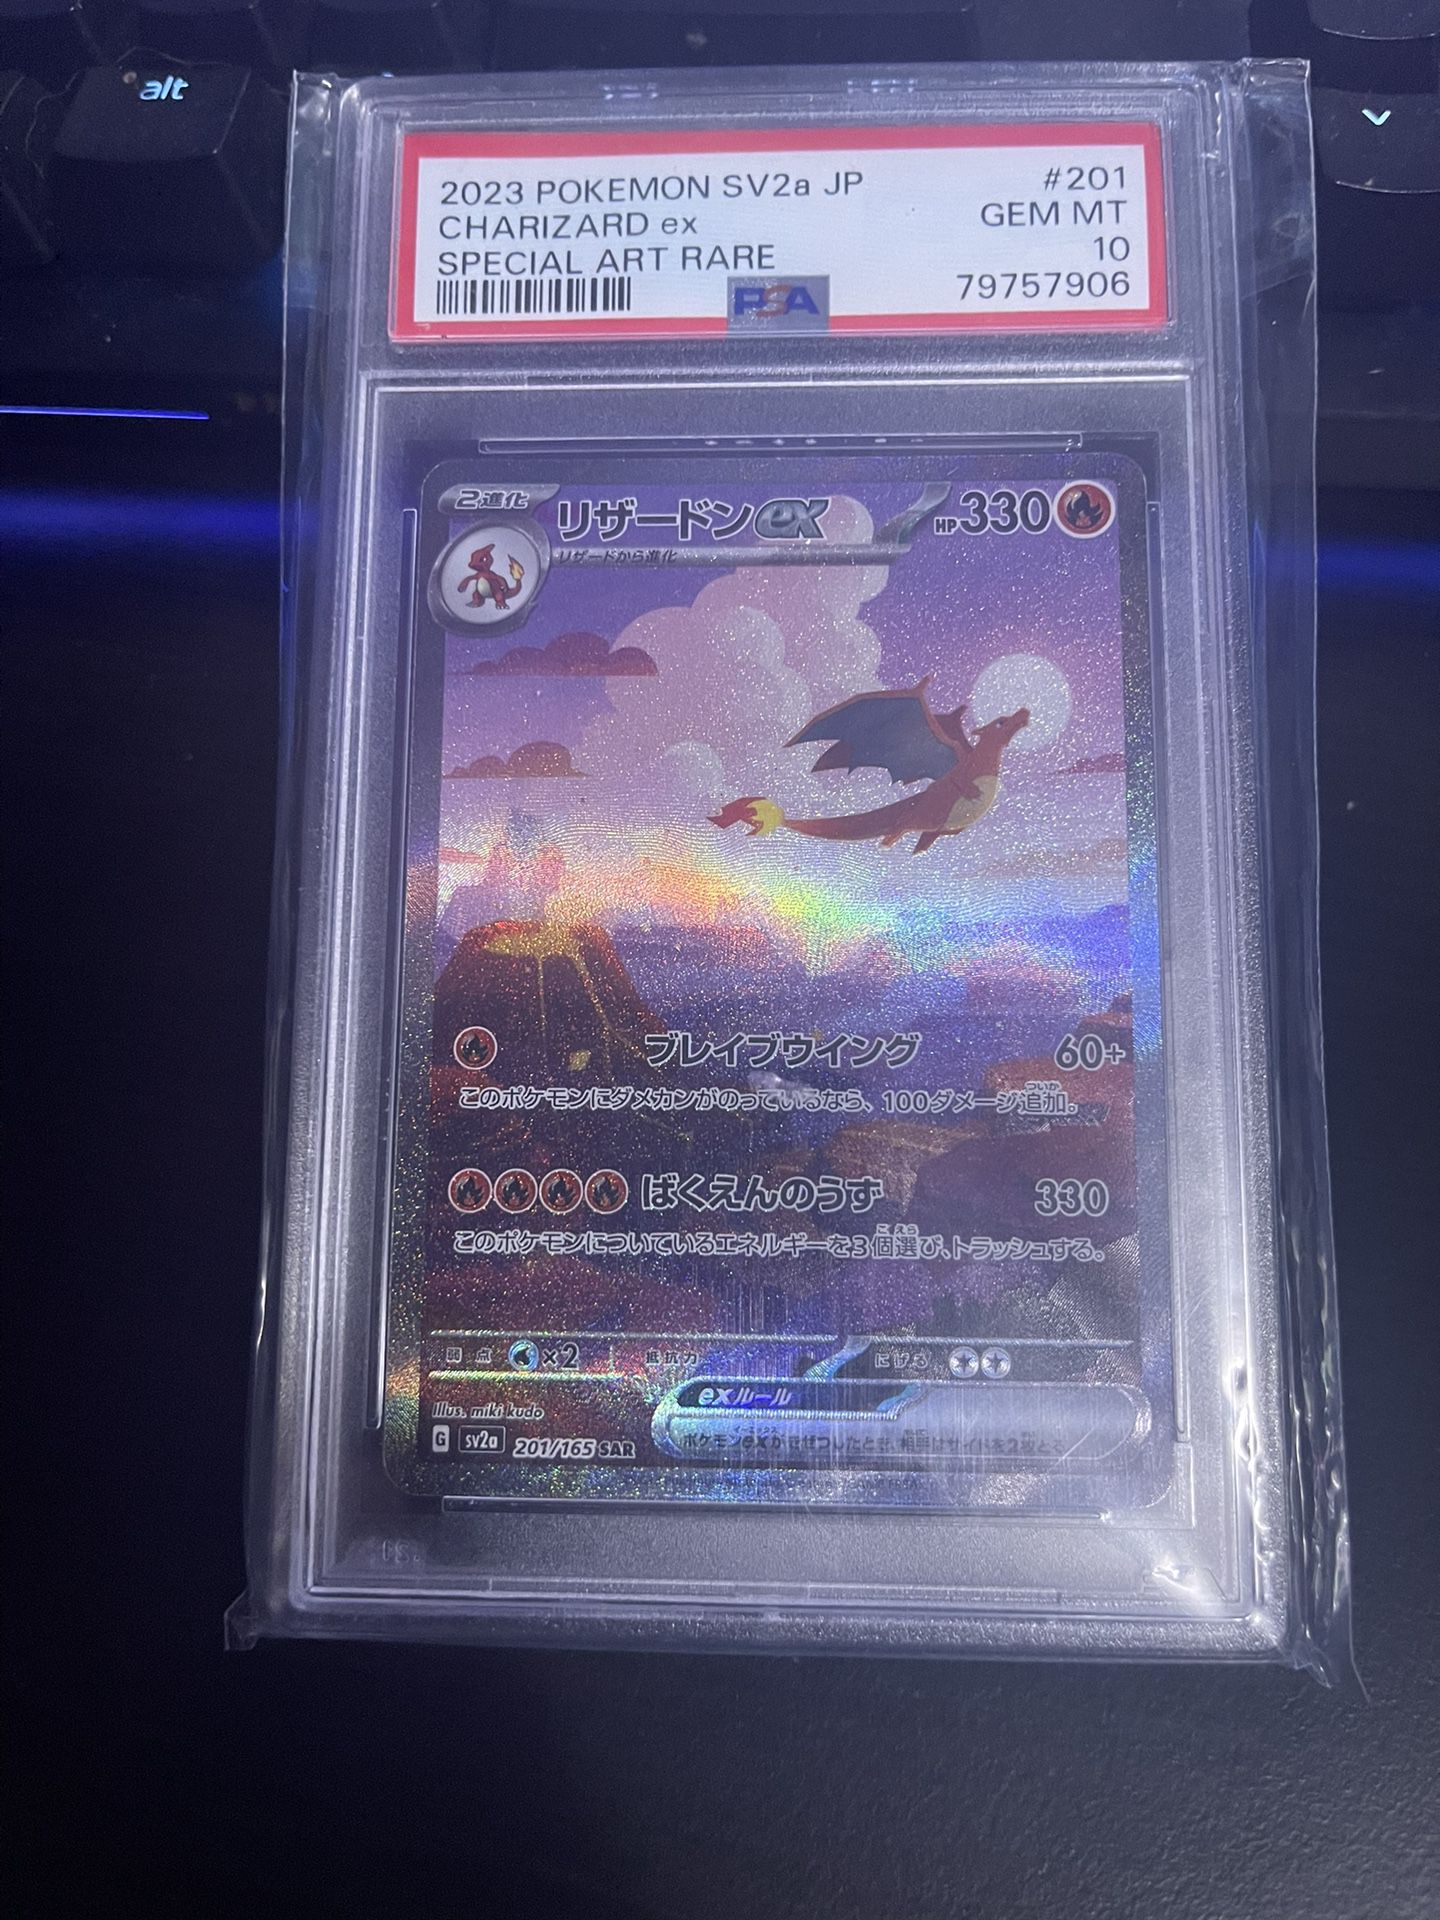 PSA 10 Charizard ex 201/165 Special Art Rare Pokemon Card 151 Japanese